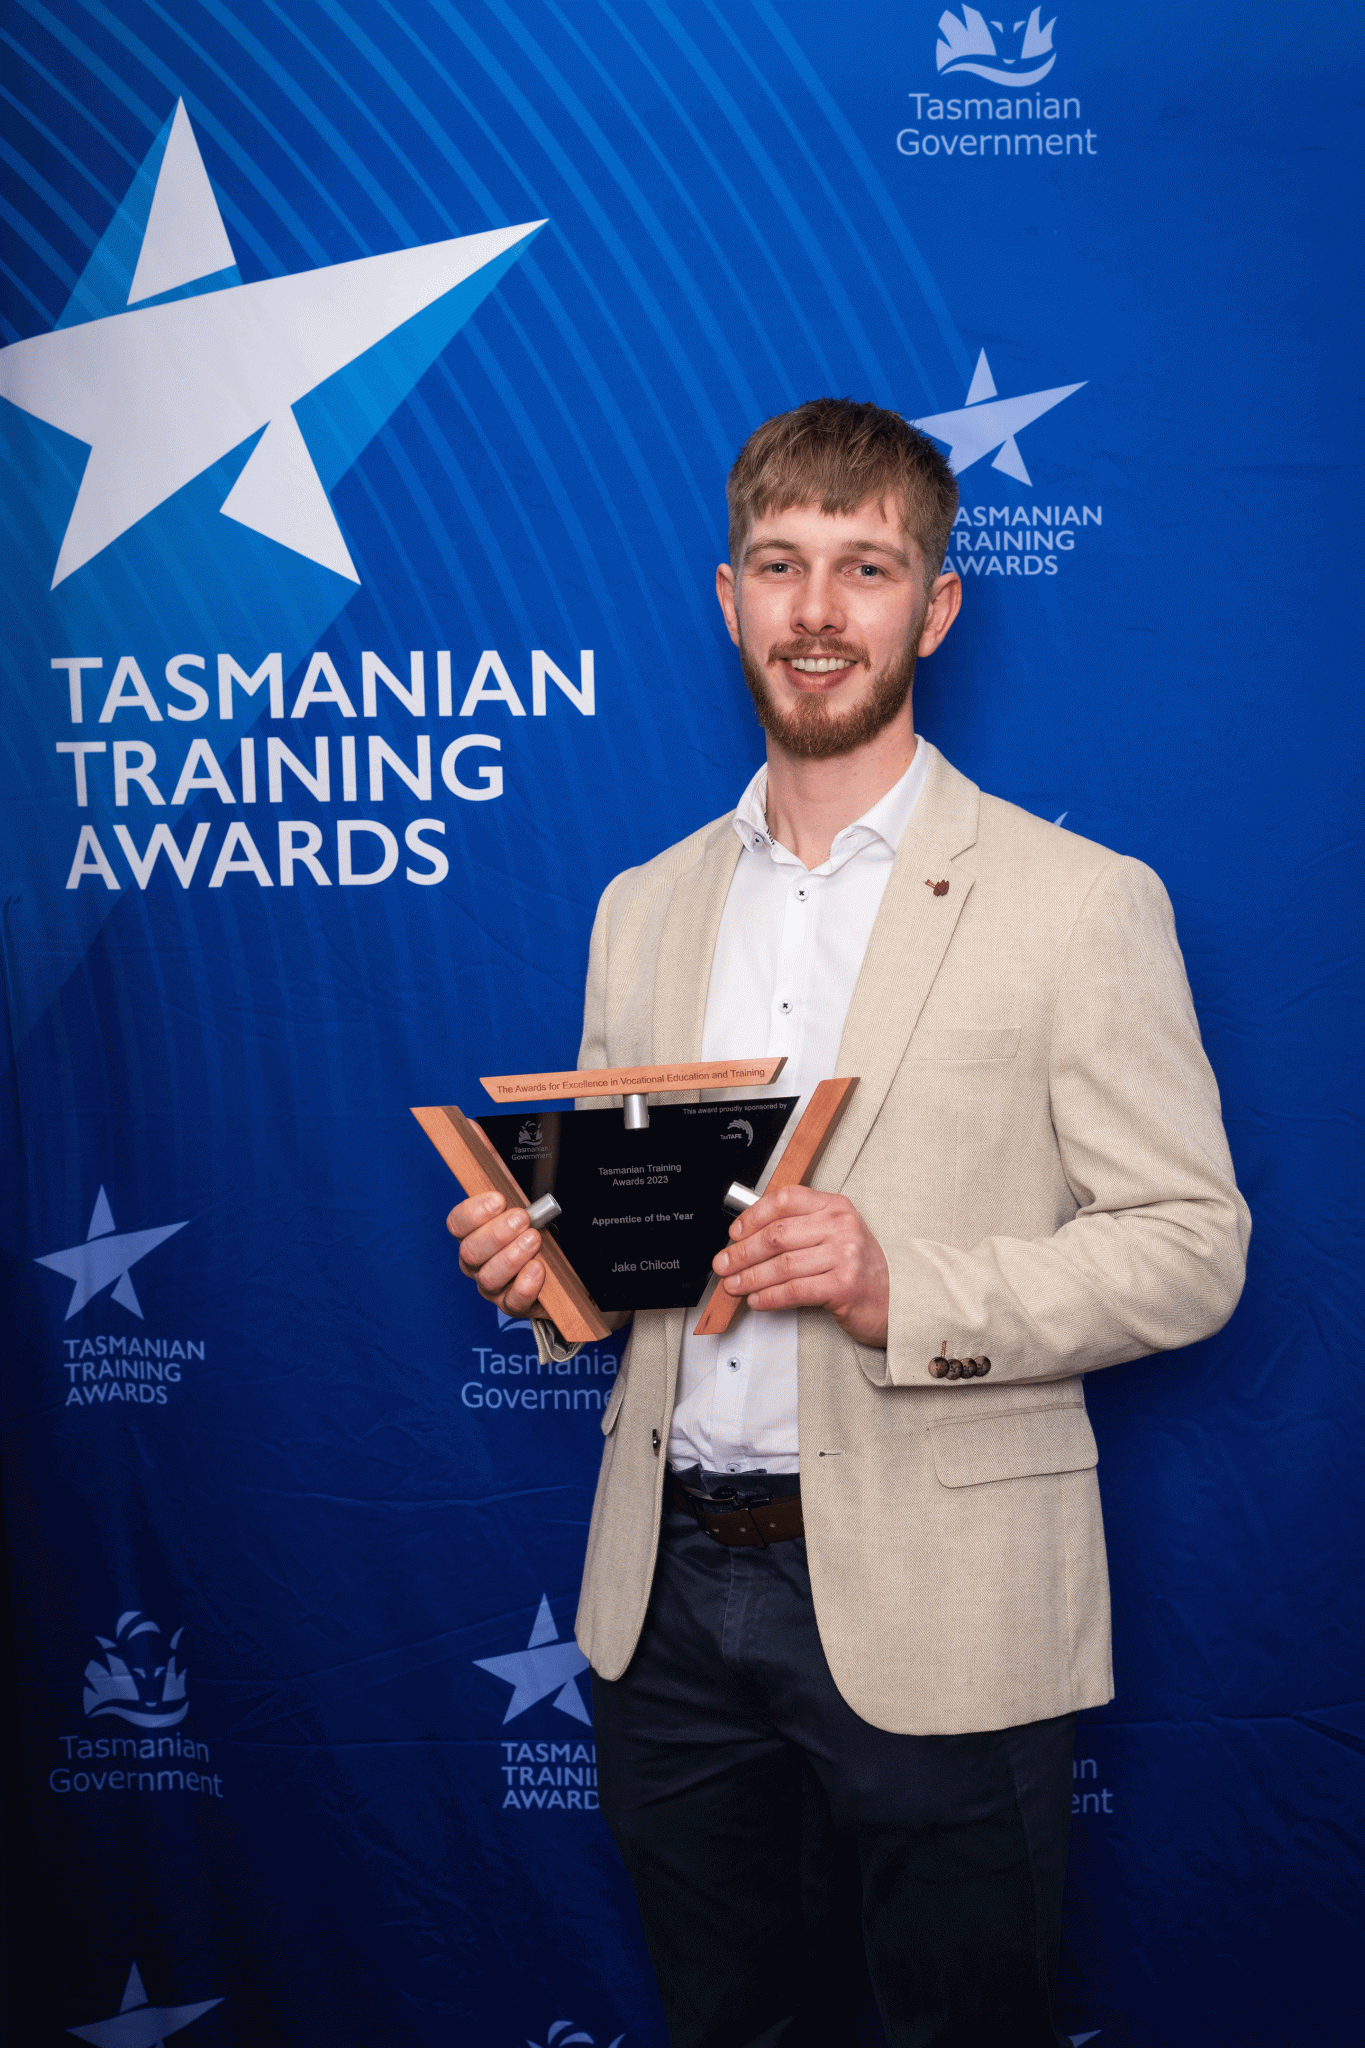 Jake Chilcott awarded 2023 Tasmanian Apprentice of the Year